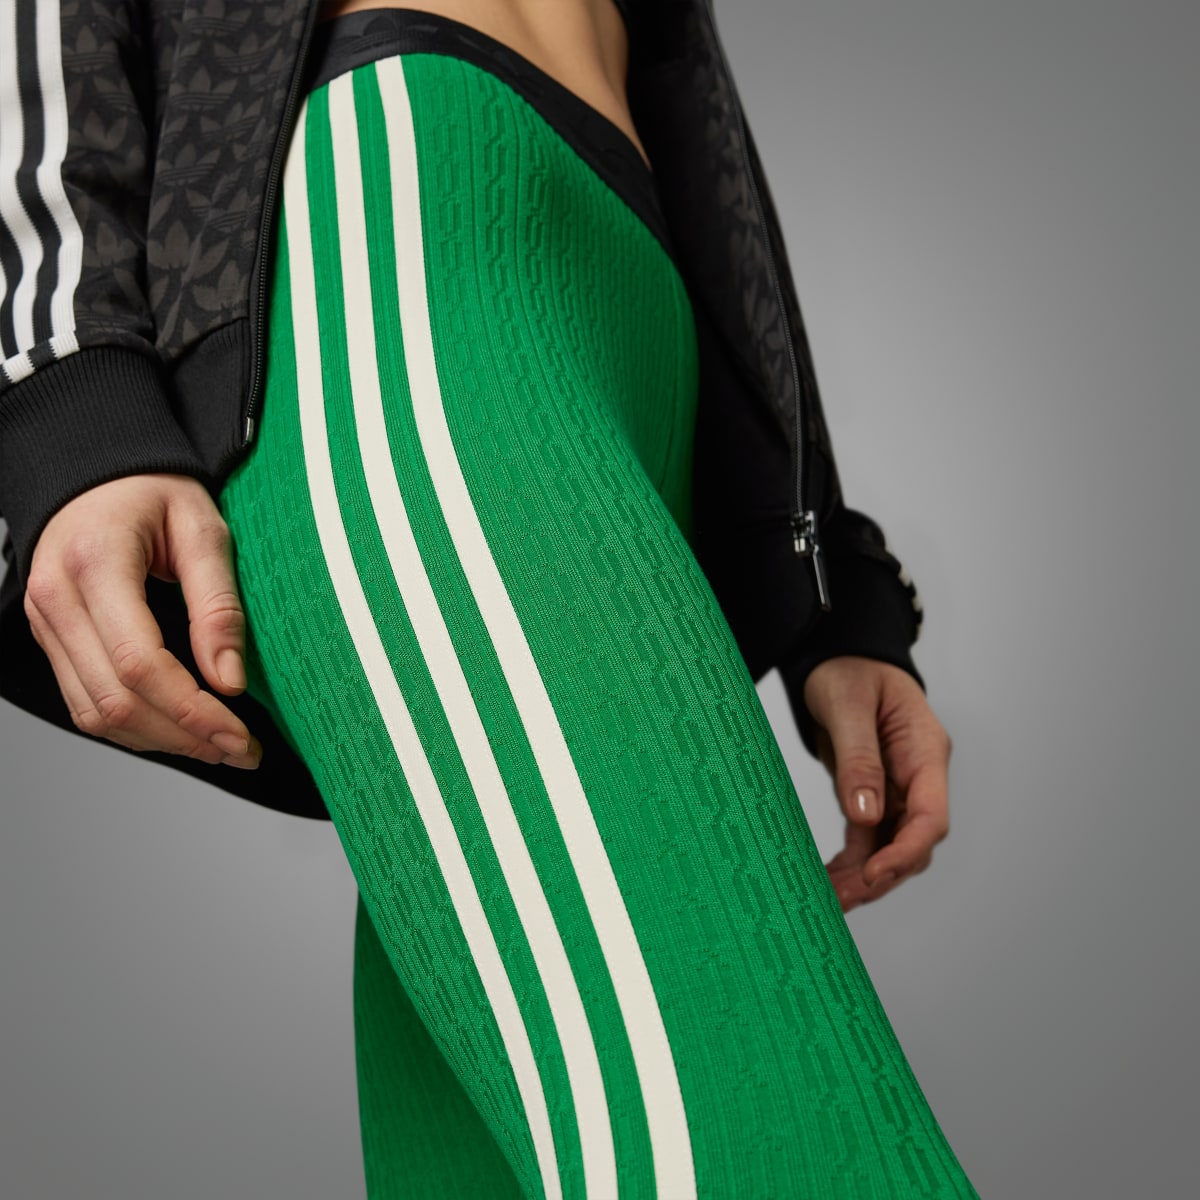 adidas Adicolor 3-Stripes Leggings - Green